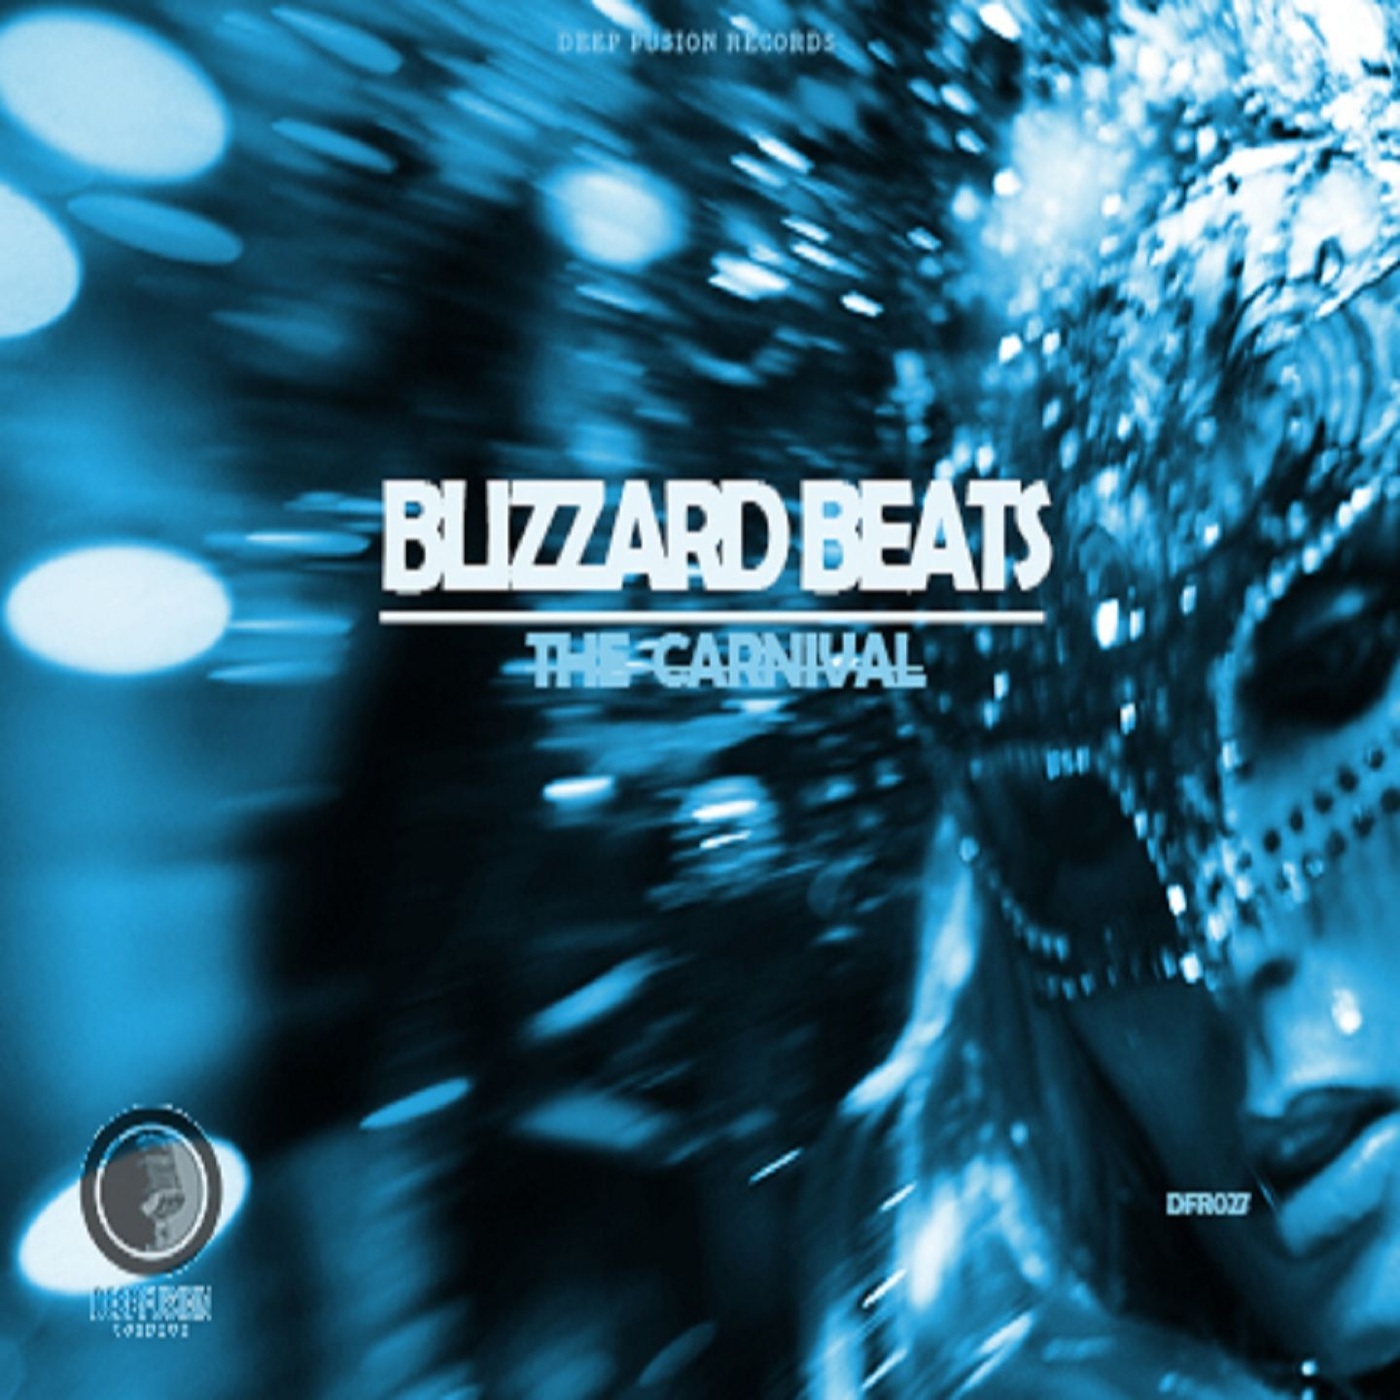 Blizzard Beats - The Carnival / Deep Fusion Records